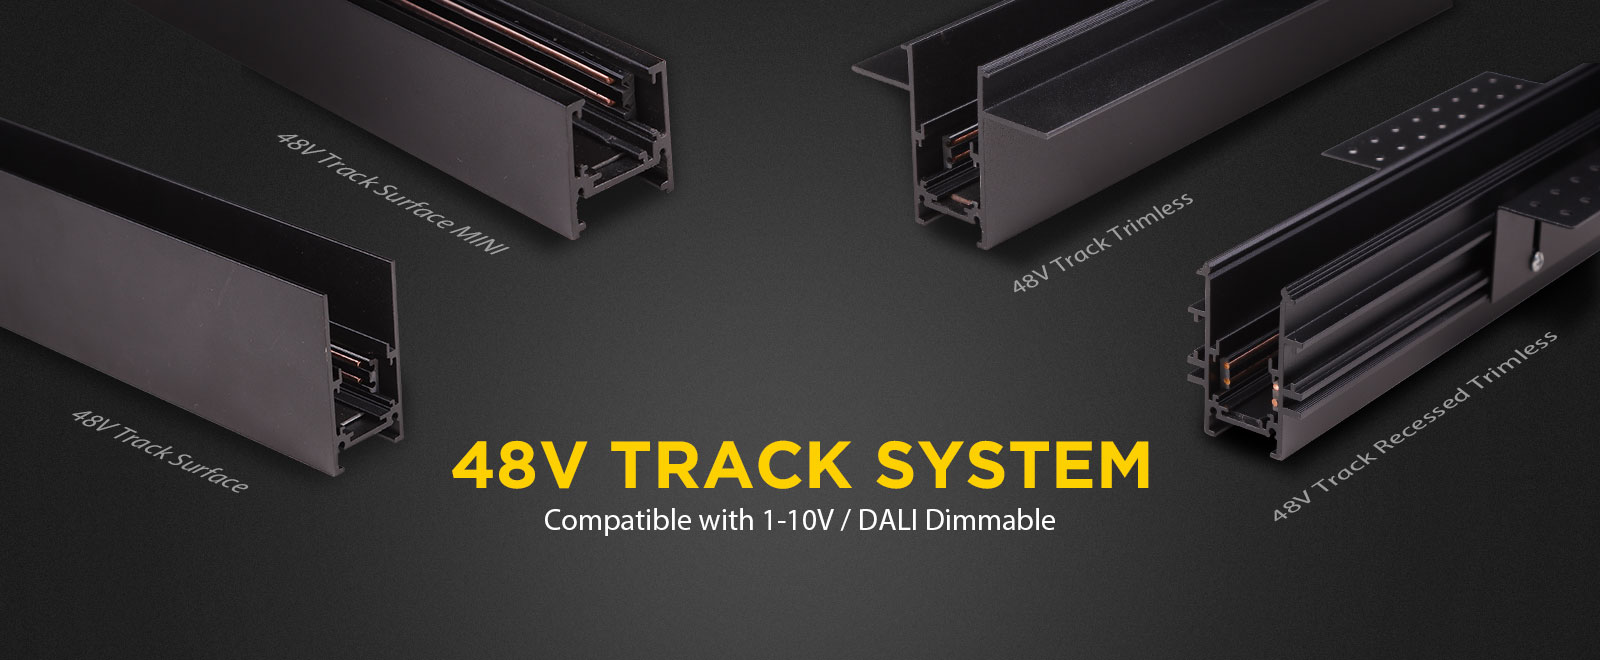 48V Track System